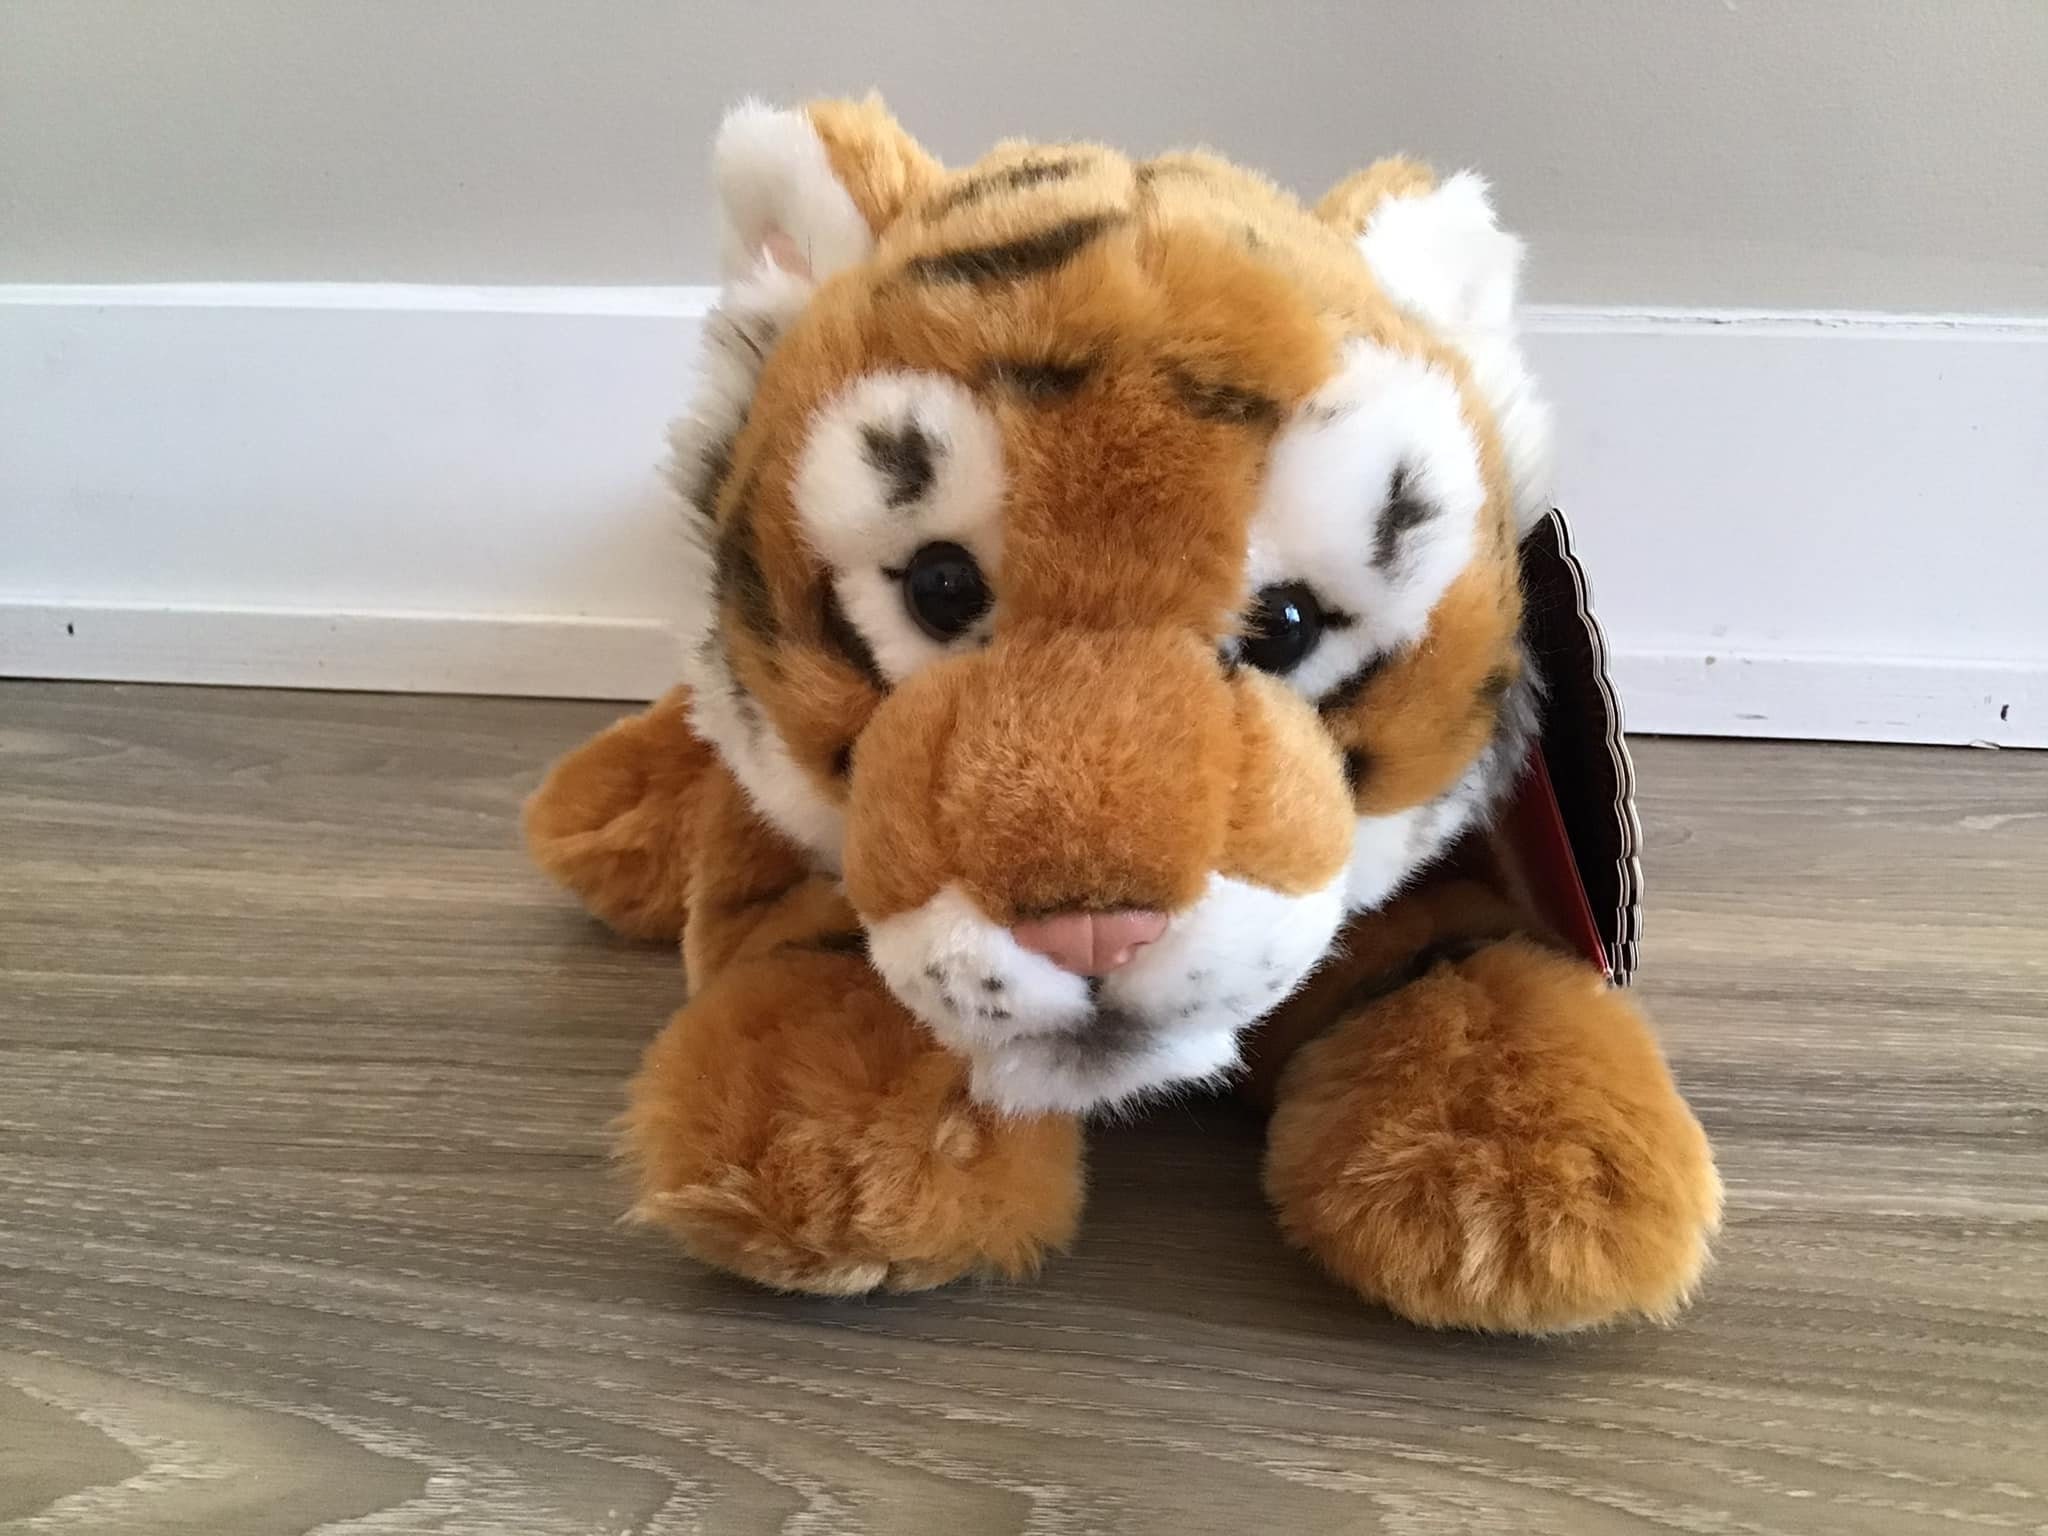 The Tiger Mr. Cotsen Sent: An F.A.O. Schwartz Memory